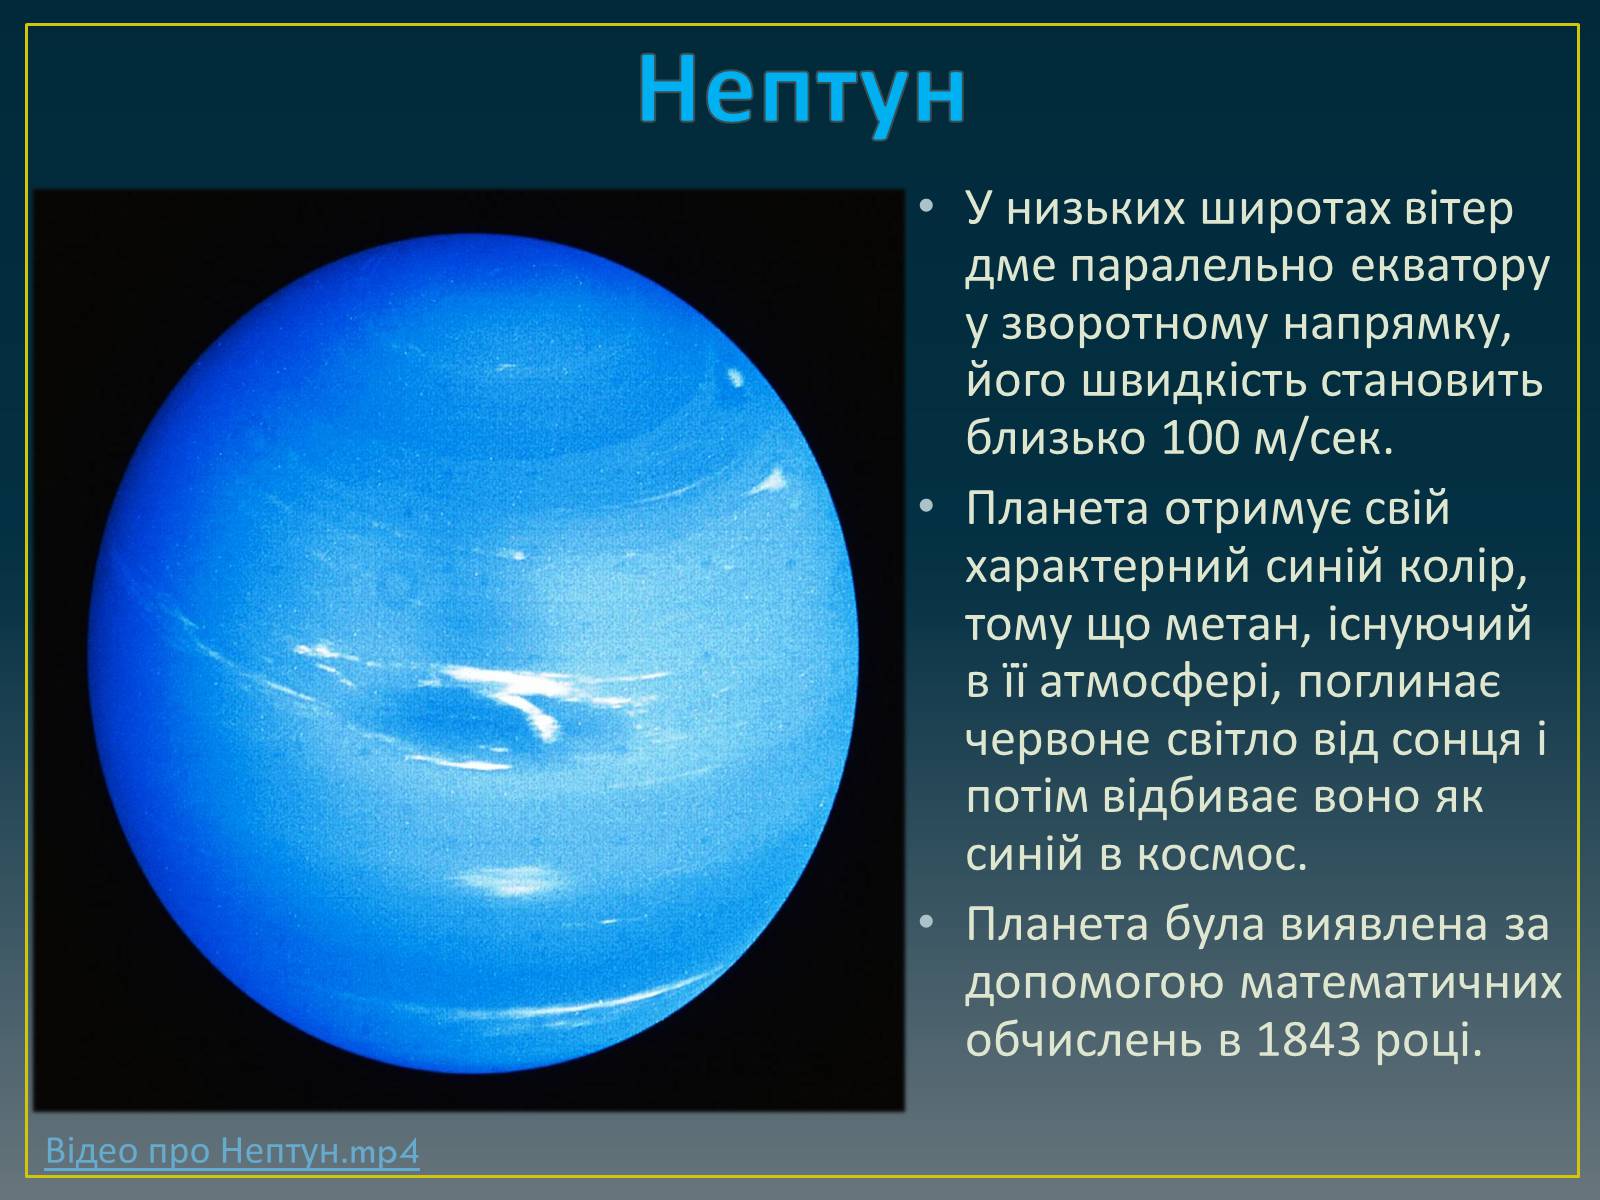 Сообщение о нептуне. Нептун (Планета). Нептун доклад. Интересные факты о Нептуне. Сообщение о Нептуне 5 класс.